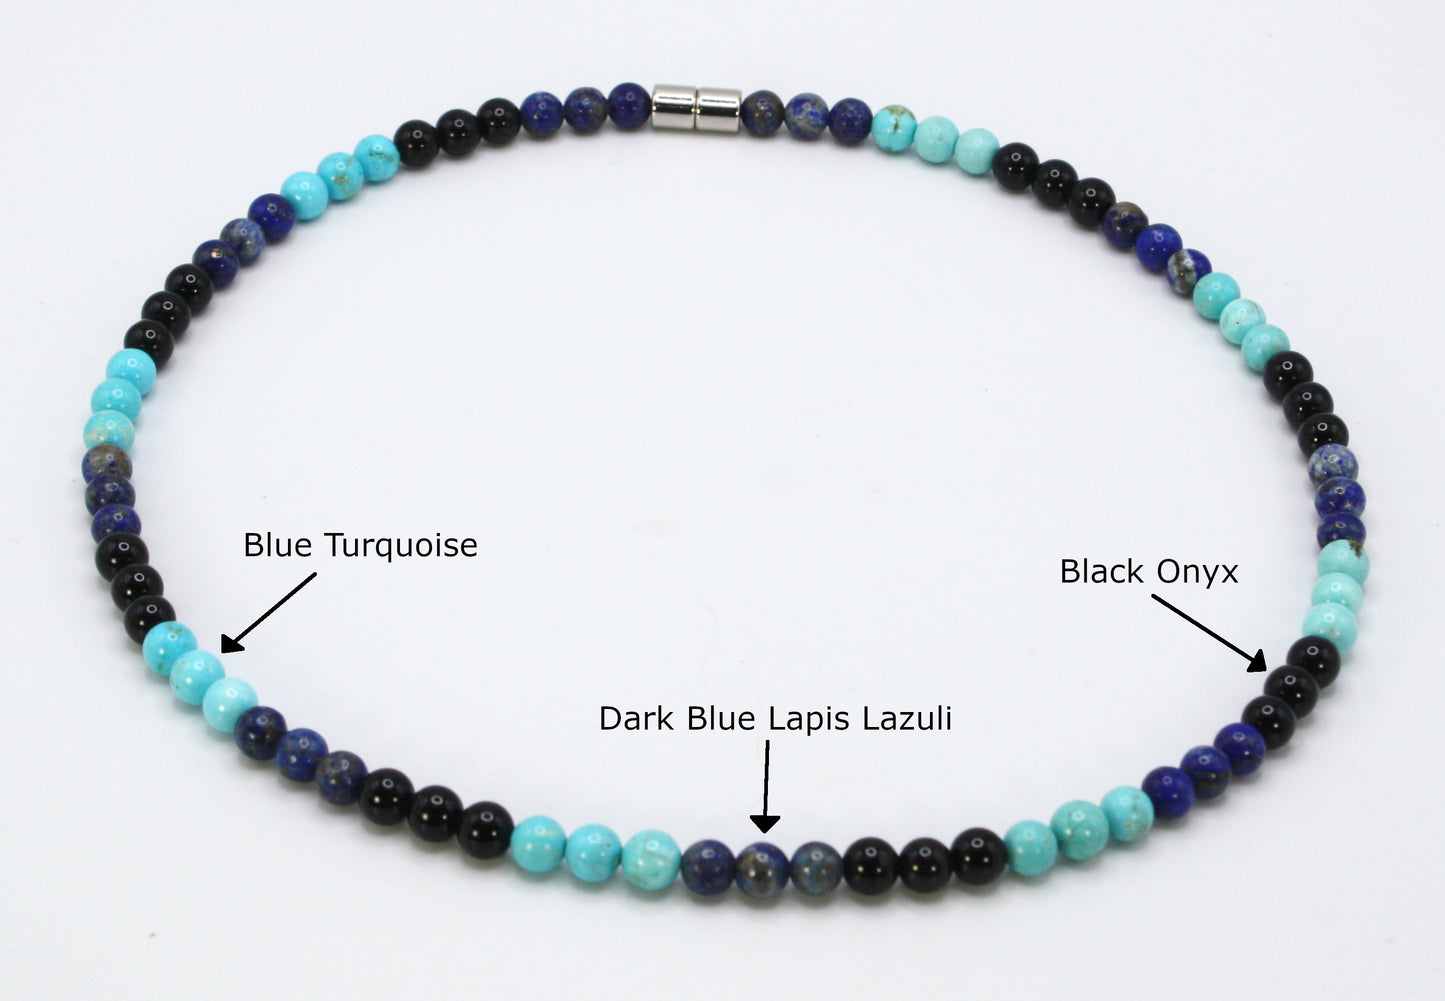 Amethyst Black Onyx Dark Blue Lapis Lazuli Light Blue Turquoise Necklace - For Man/Woman - 6mm Bead Diameter Necklace